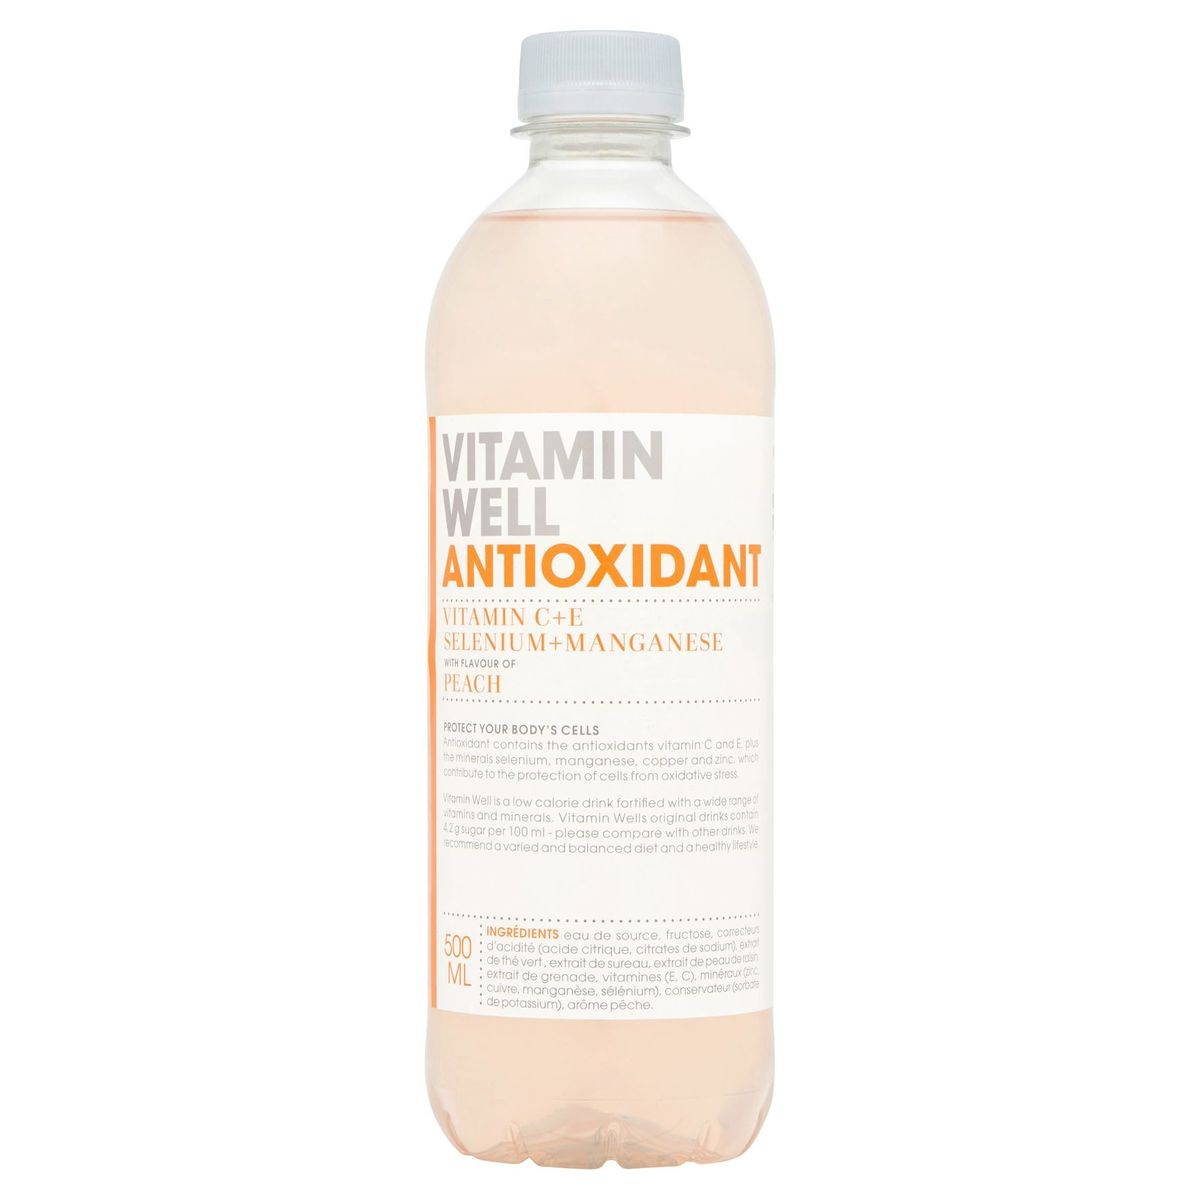 Vitamin Well Antioxidant Vitamin C + E Selenium + Manganese 500 ml